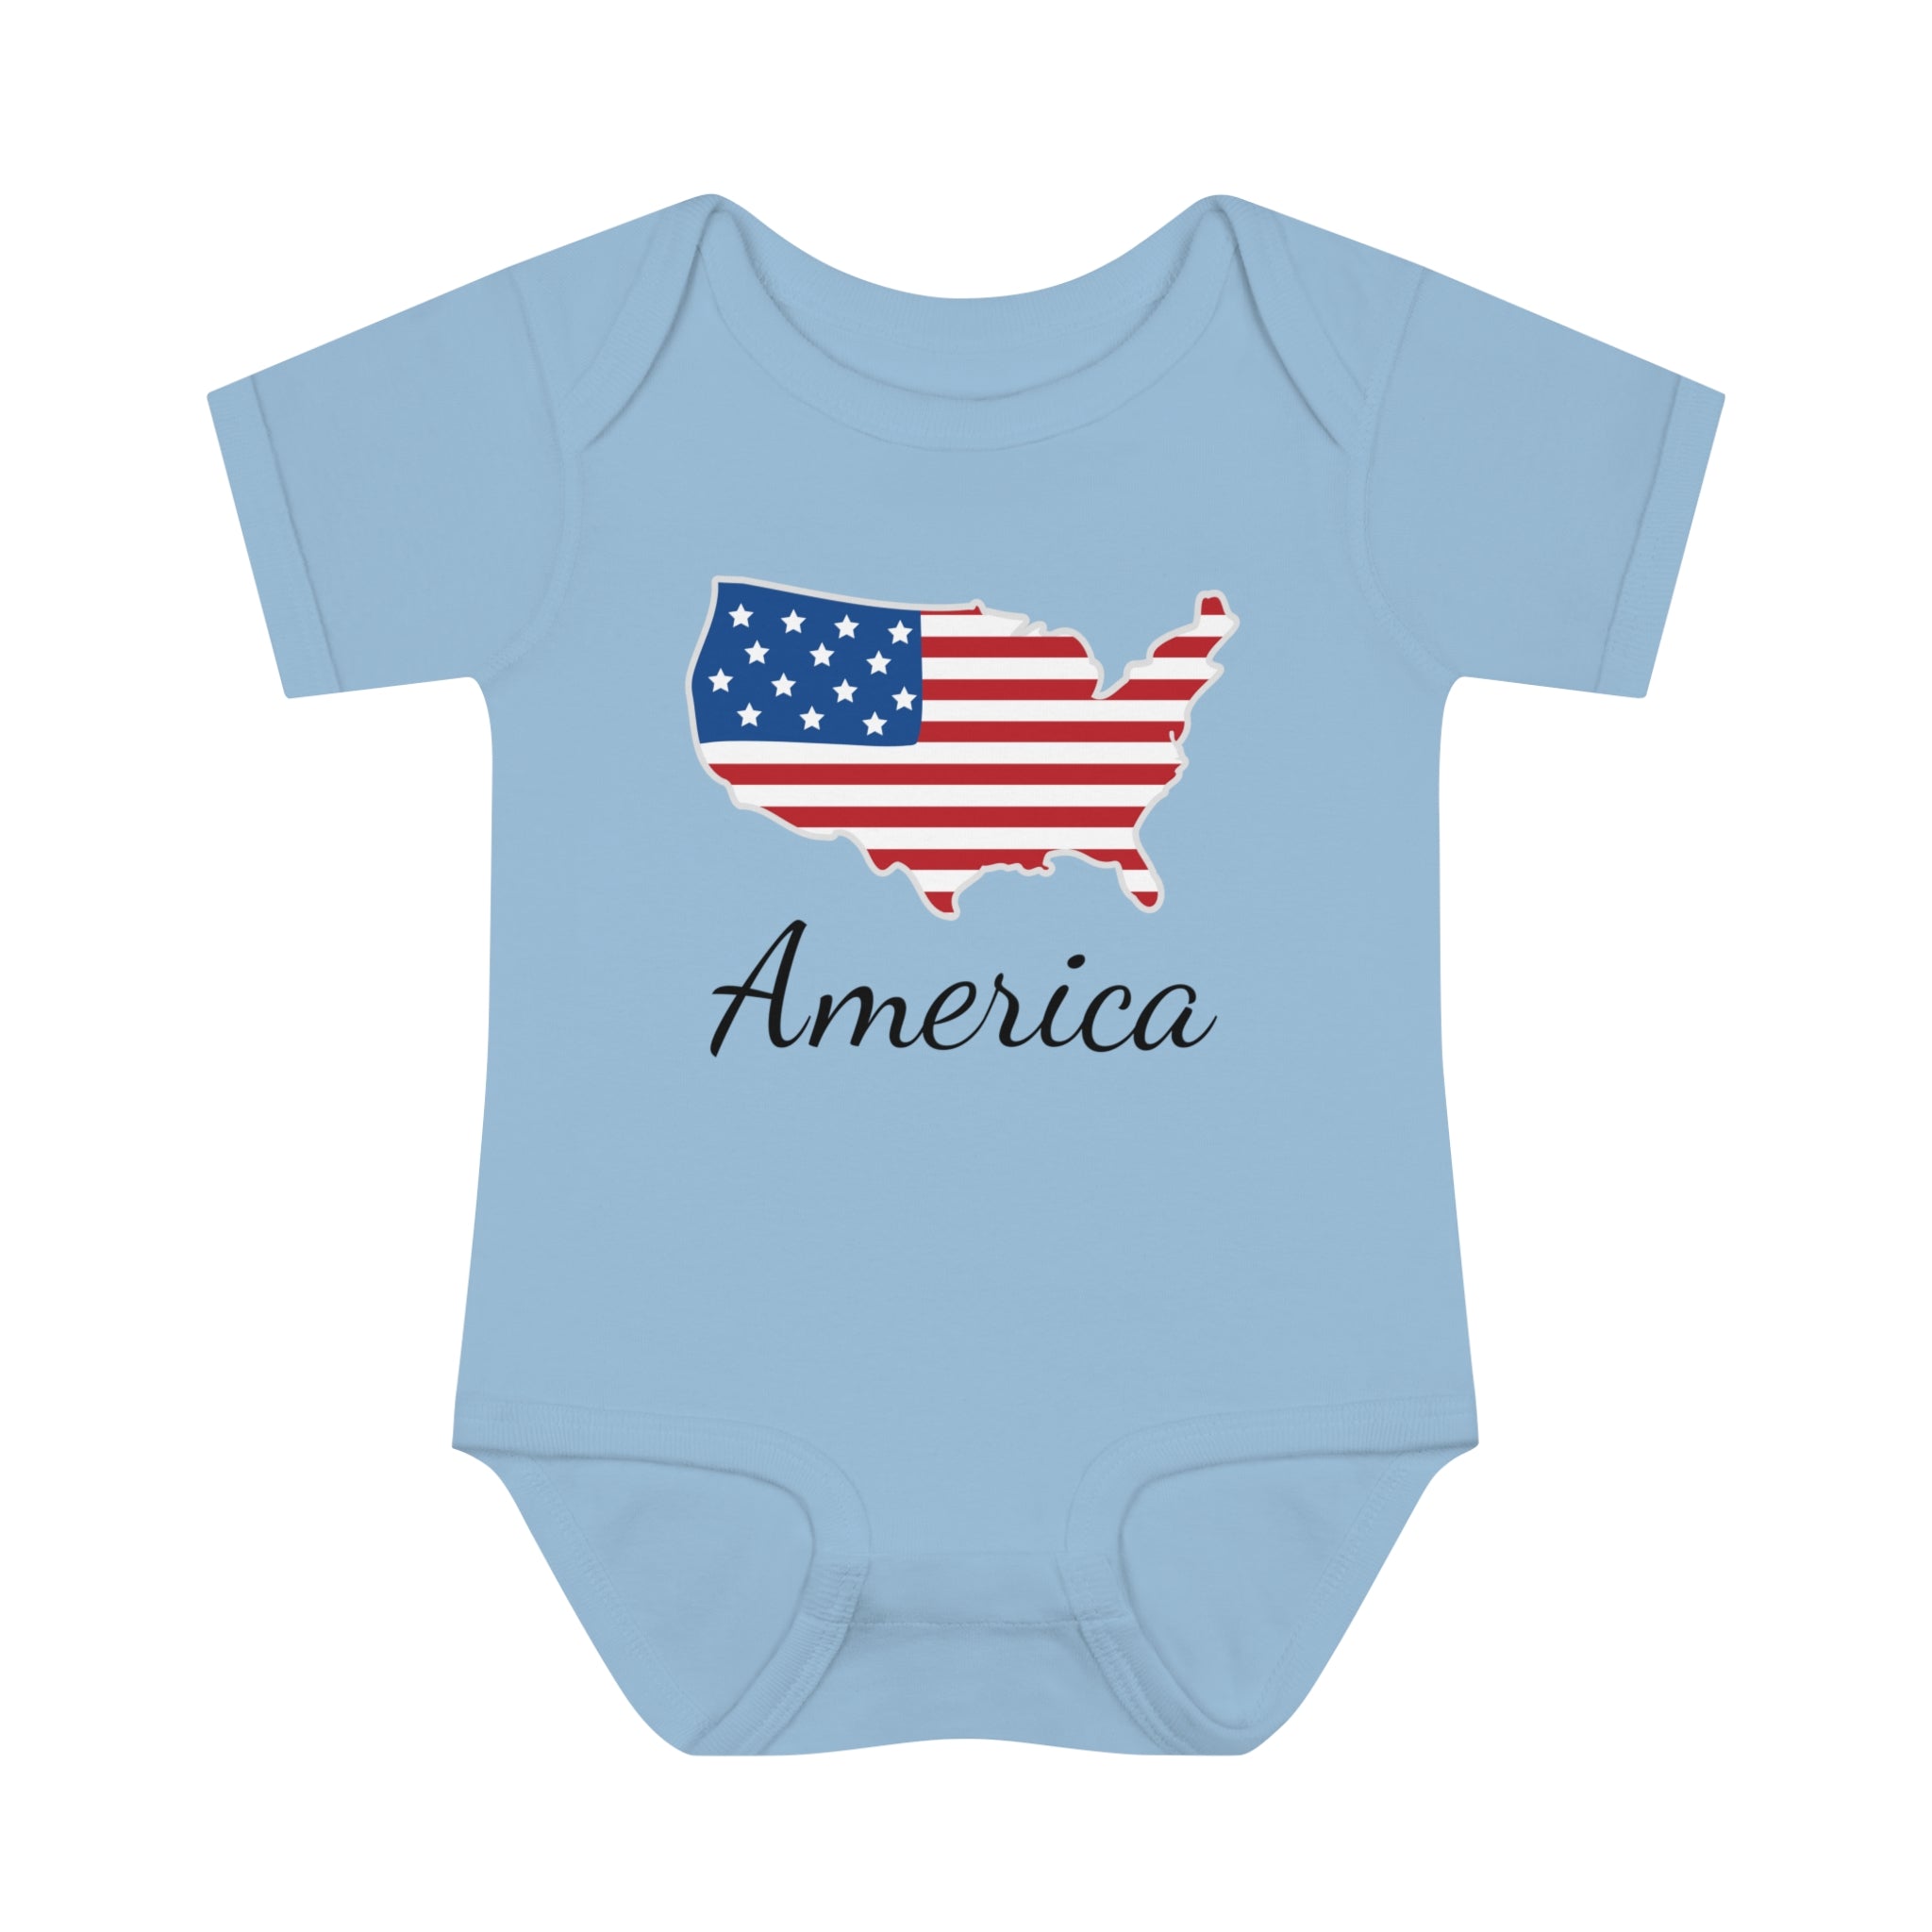 America Baby Bodysuit